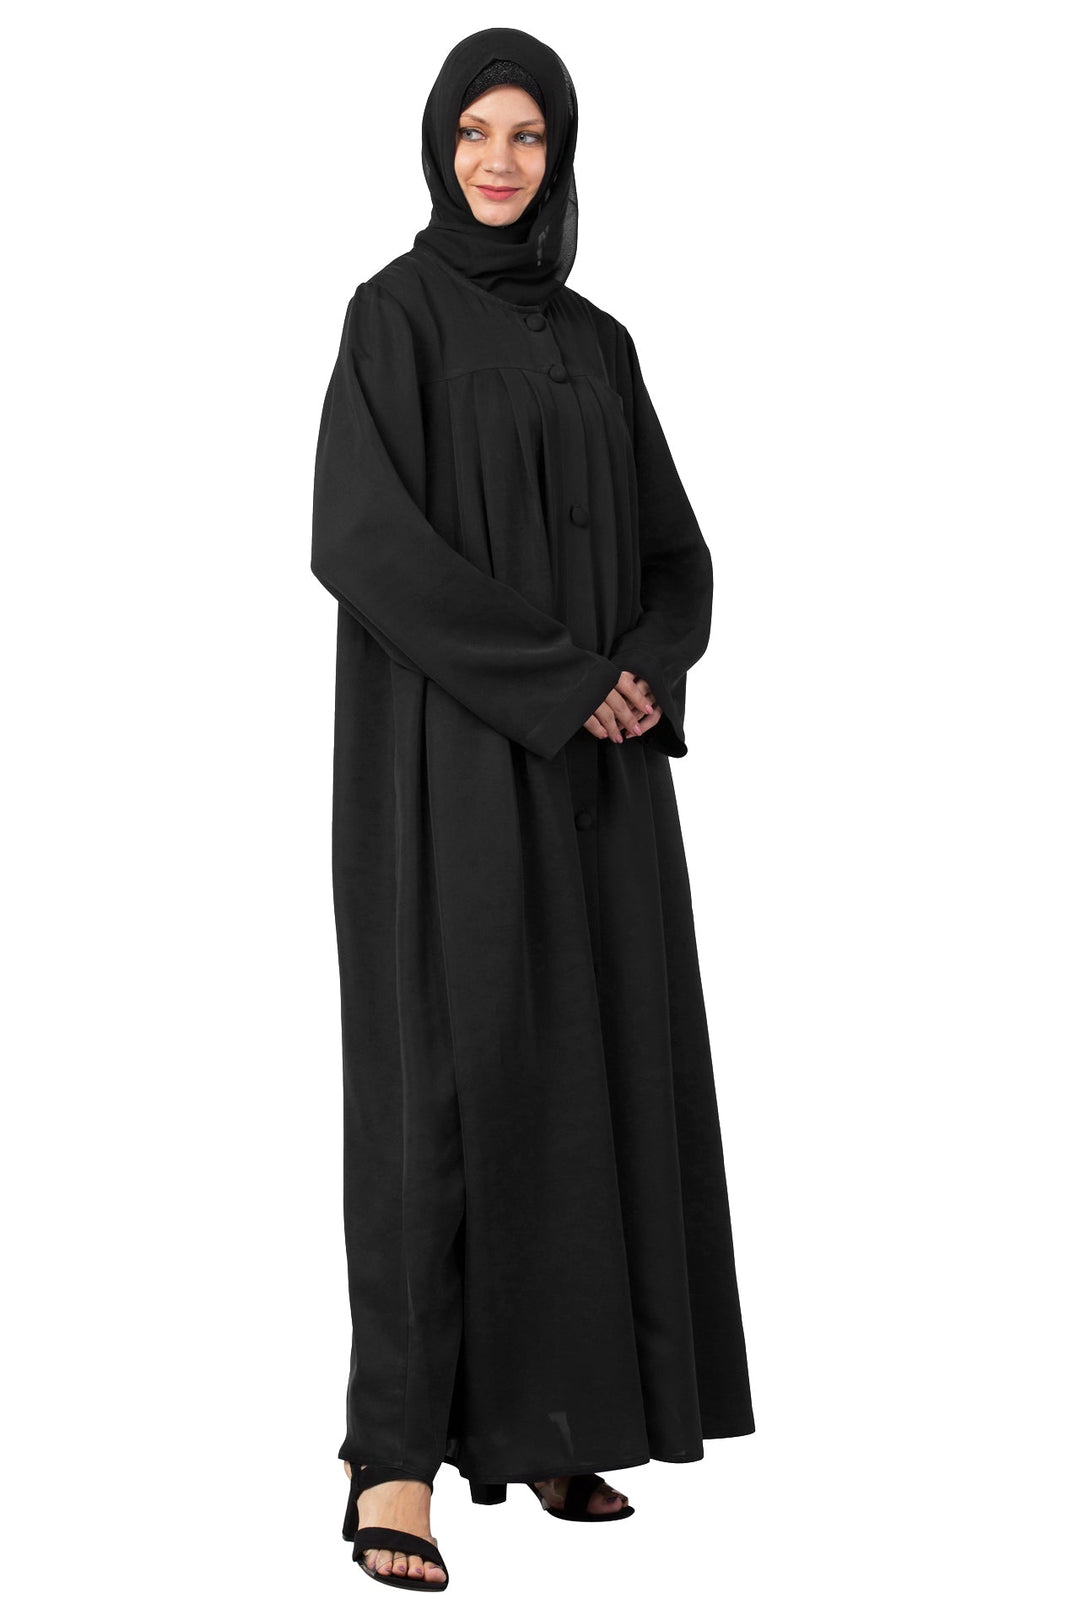 Black-Polyester-Abaya-Burqa-With-Scarf